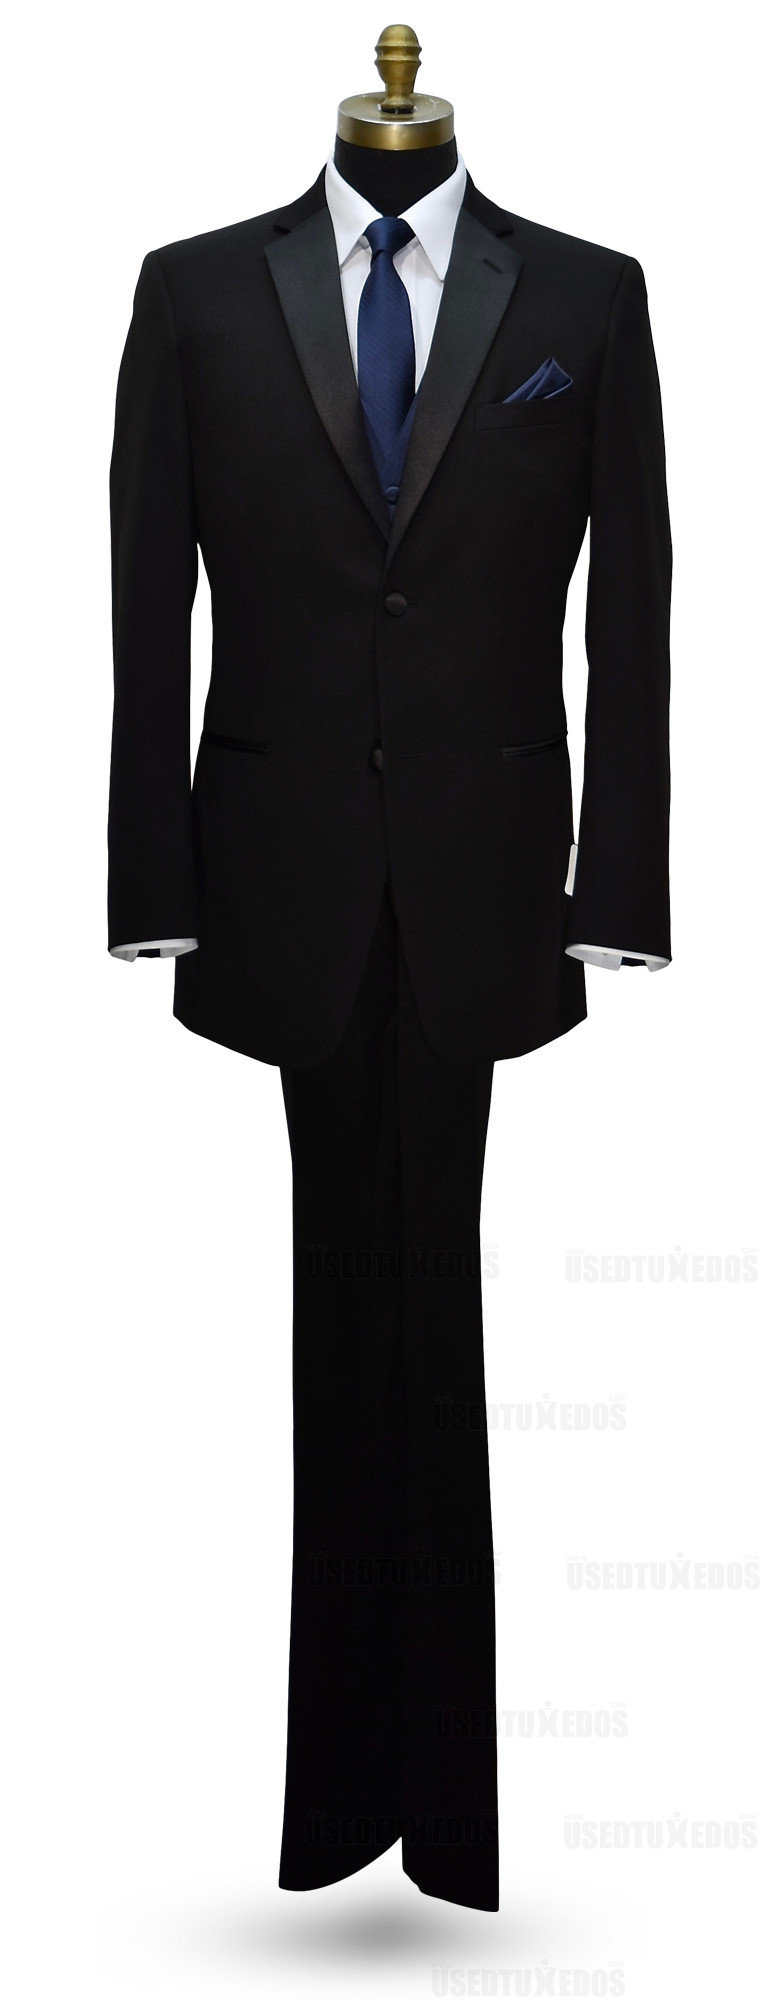 Black notch lapel tuxedo with navy blue vest and long tie